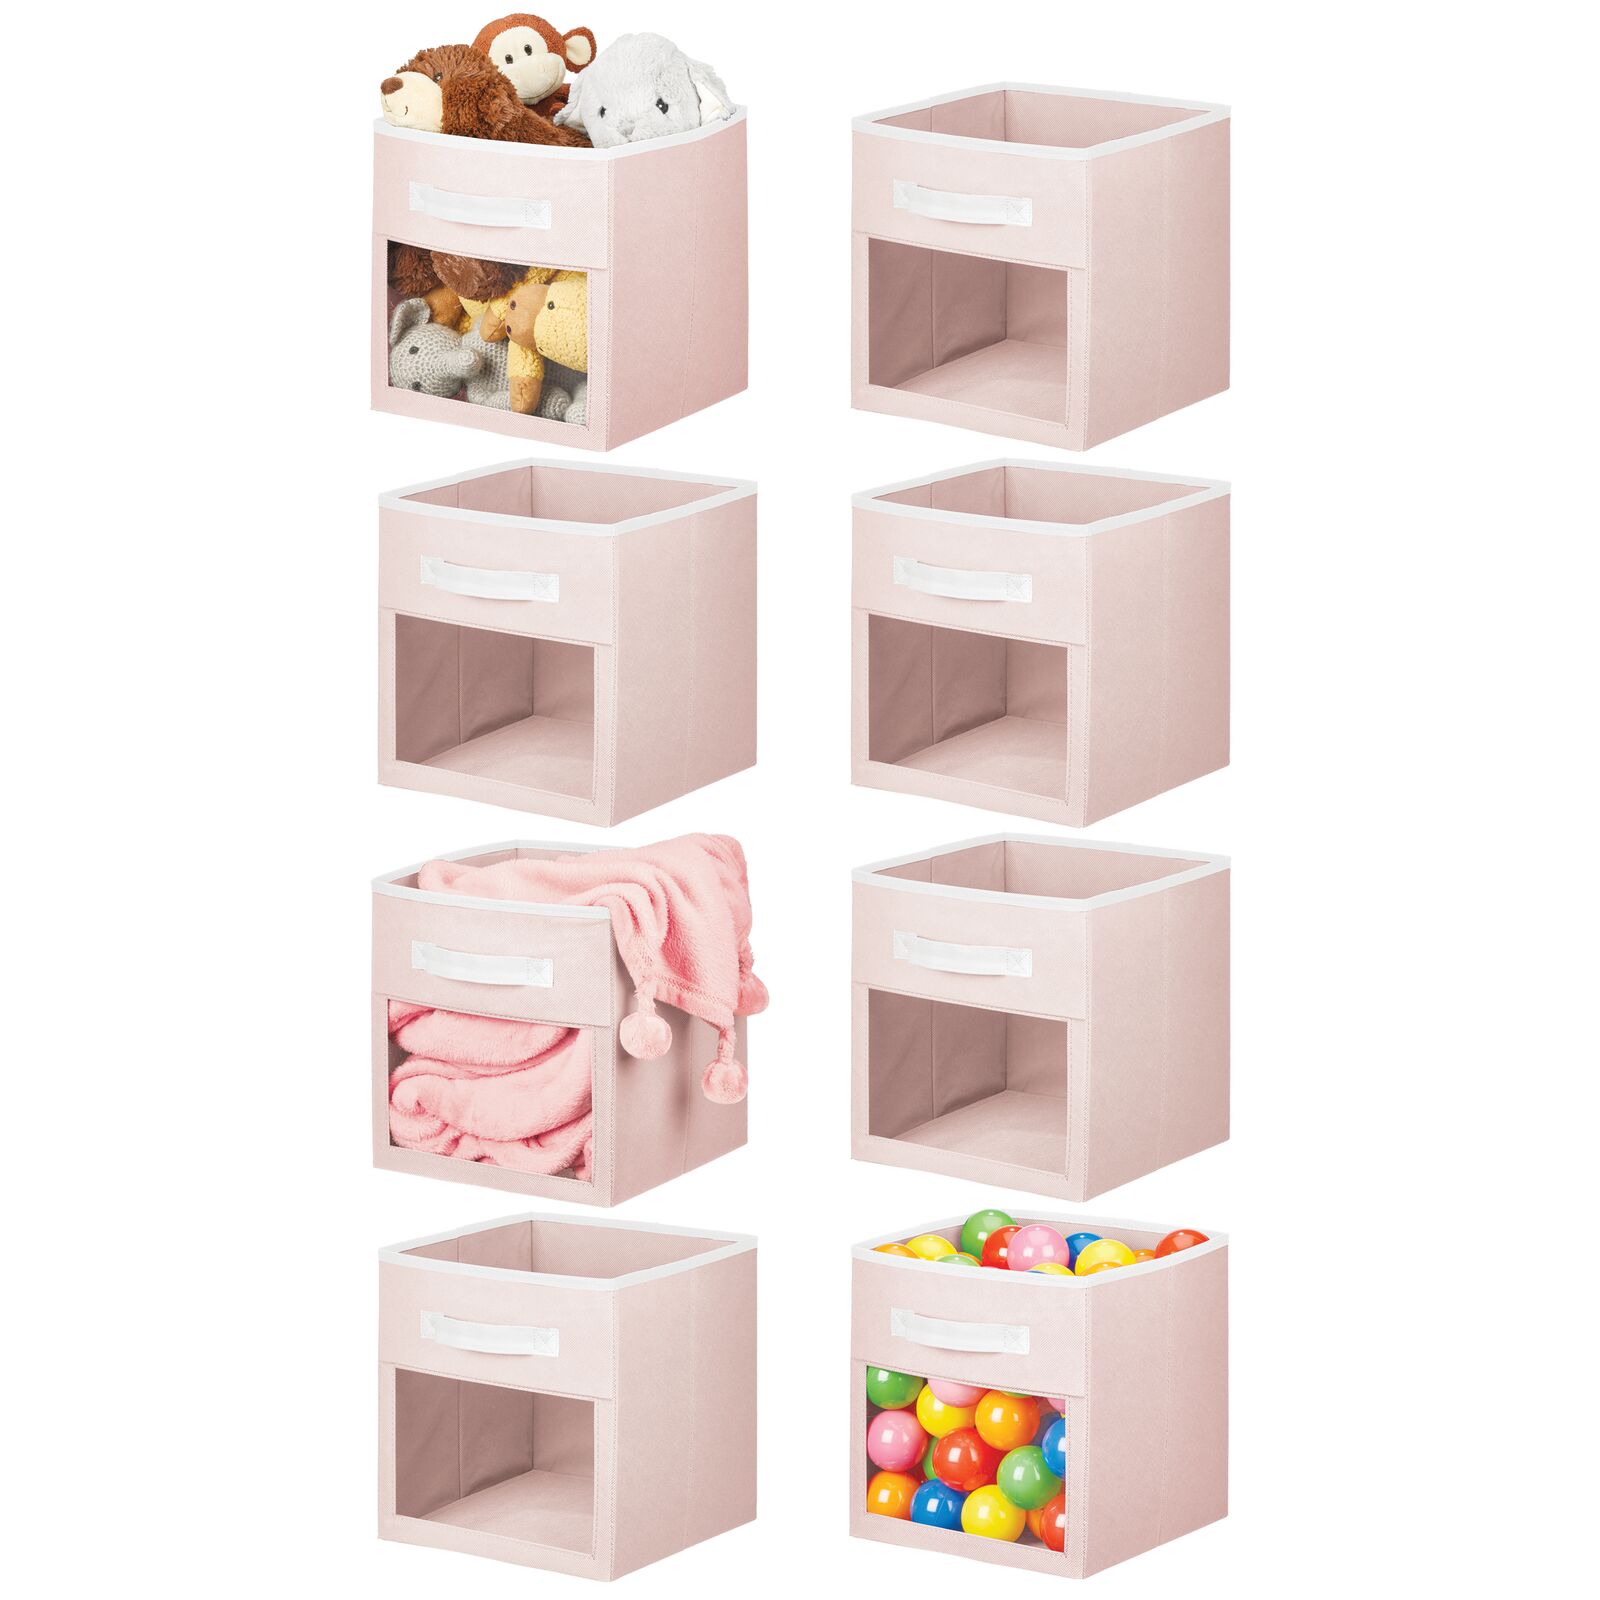 DIVINE ART Art Multi Compartment Foldable Storage Box/Closet  Organizer/Drawer Organizer, 16 Grids For Underwear